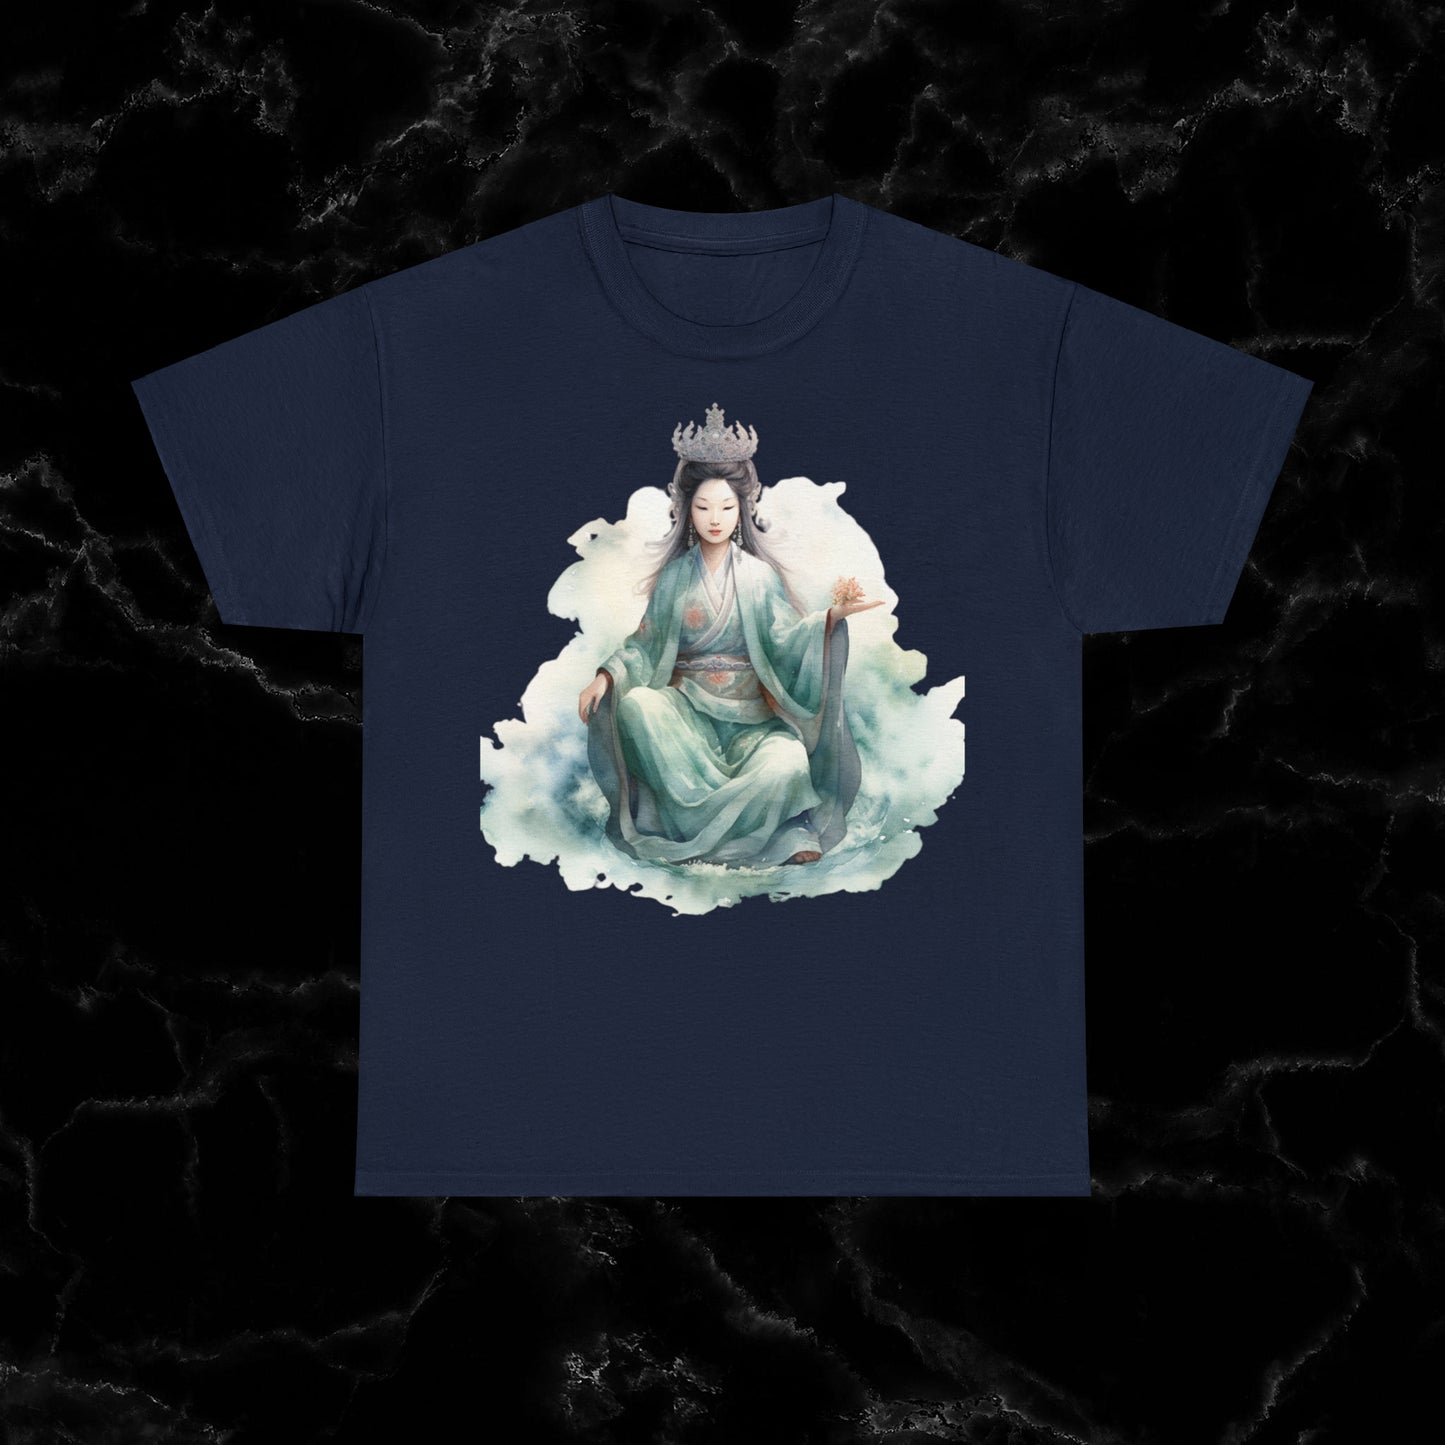 Quan Yin Spiritual Tee - Goddess of Compassion, Unisex Garment-Dyed T-shirt, Goddess of Mercy T-Shirt Navy S 